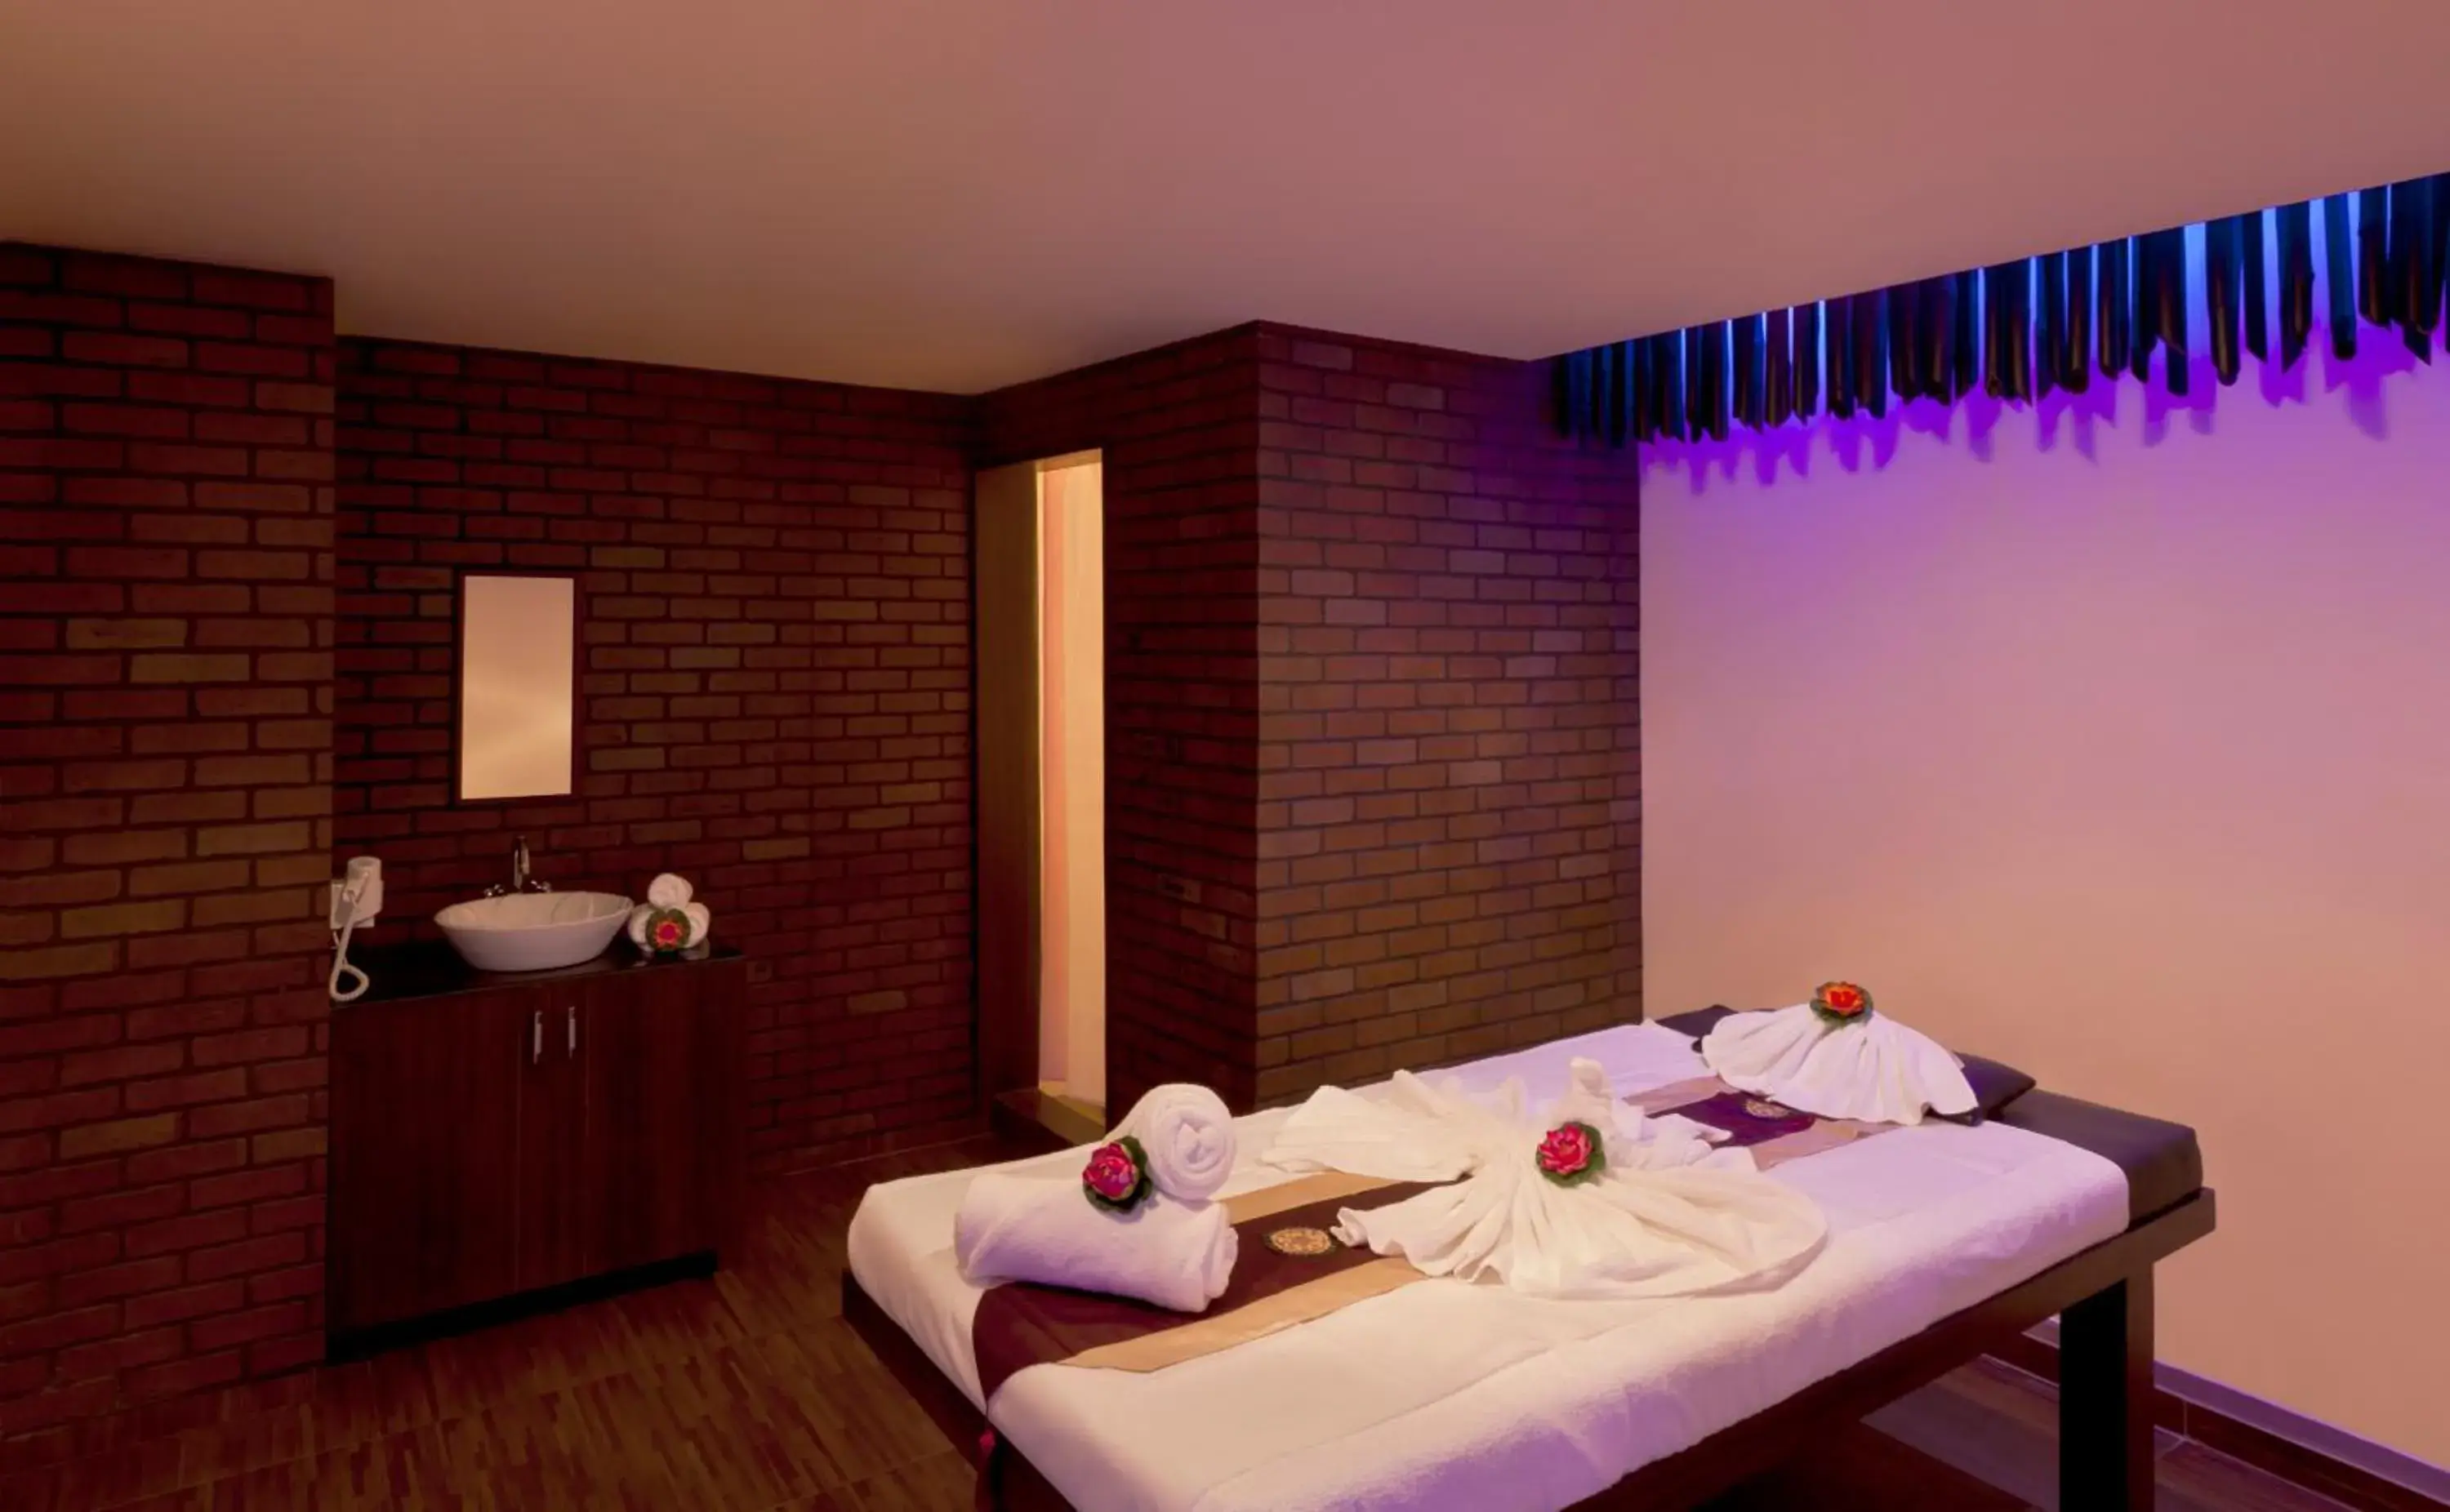 Spa and wellness centre/facilities, Spa/Wellness in Hotel Gokulam Park - Coimbatore